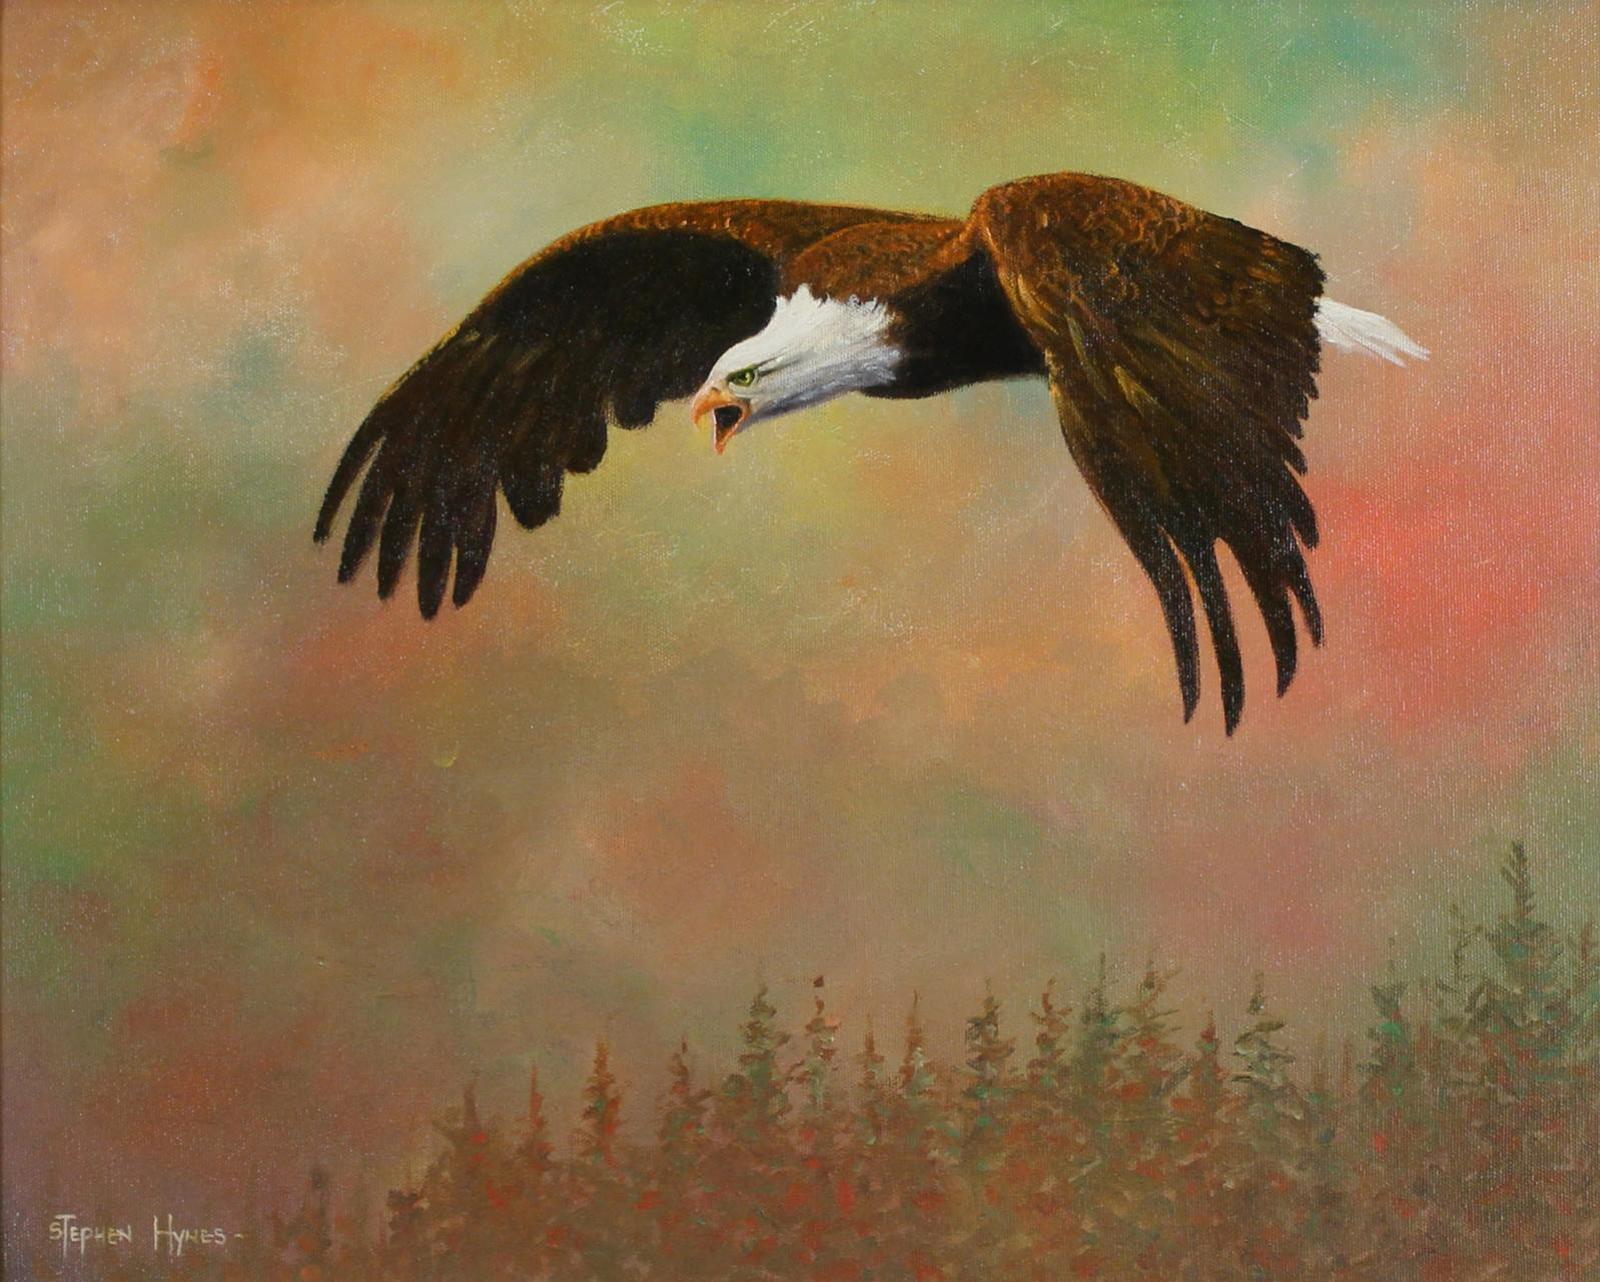 Stephen Hynes (1944) - Eagle Over Nanaimo; 2010